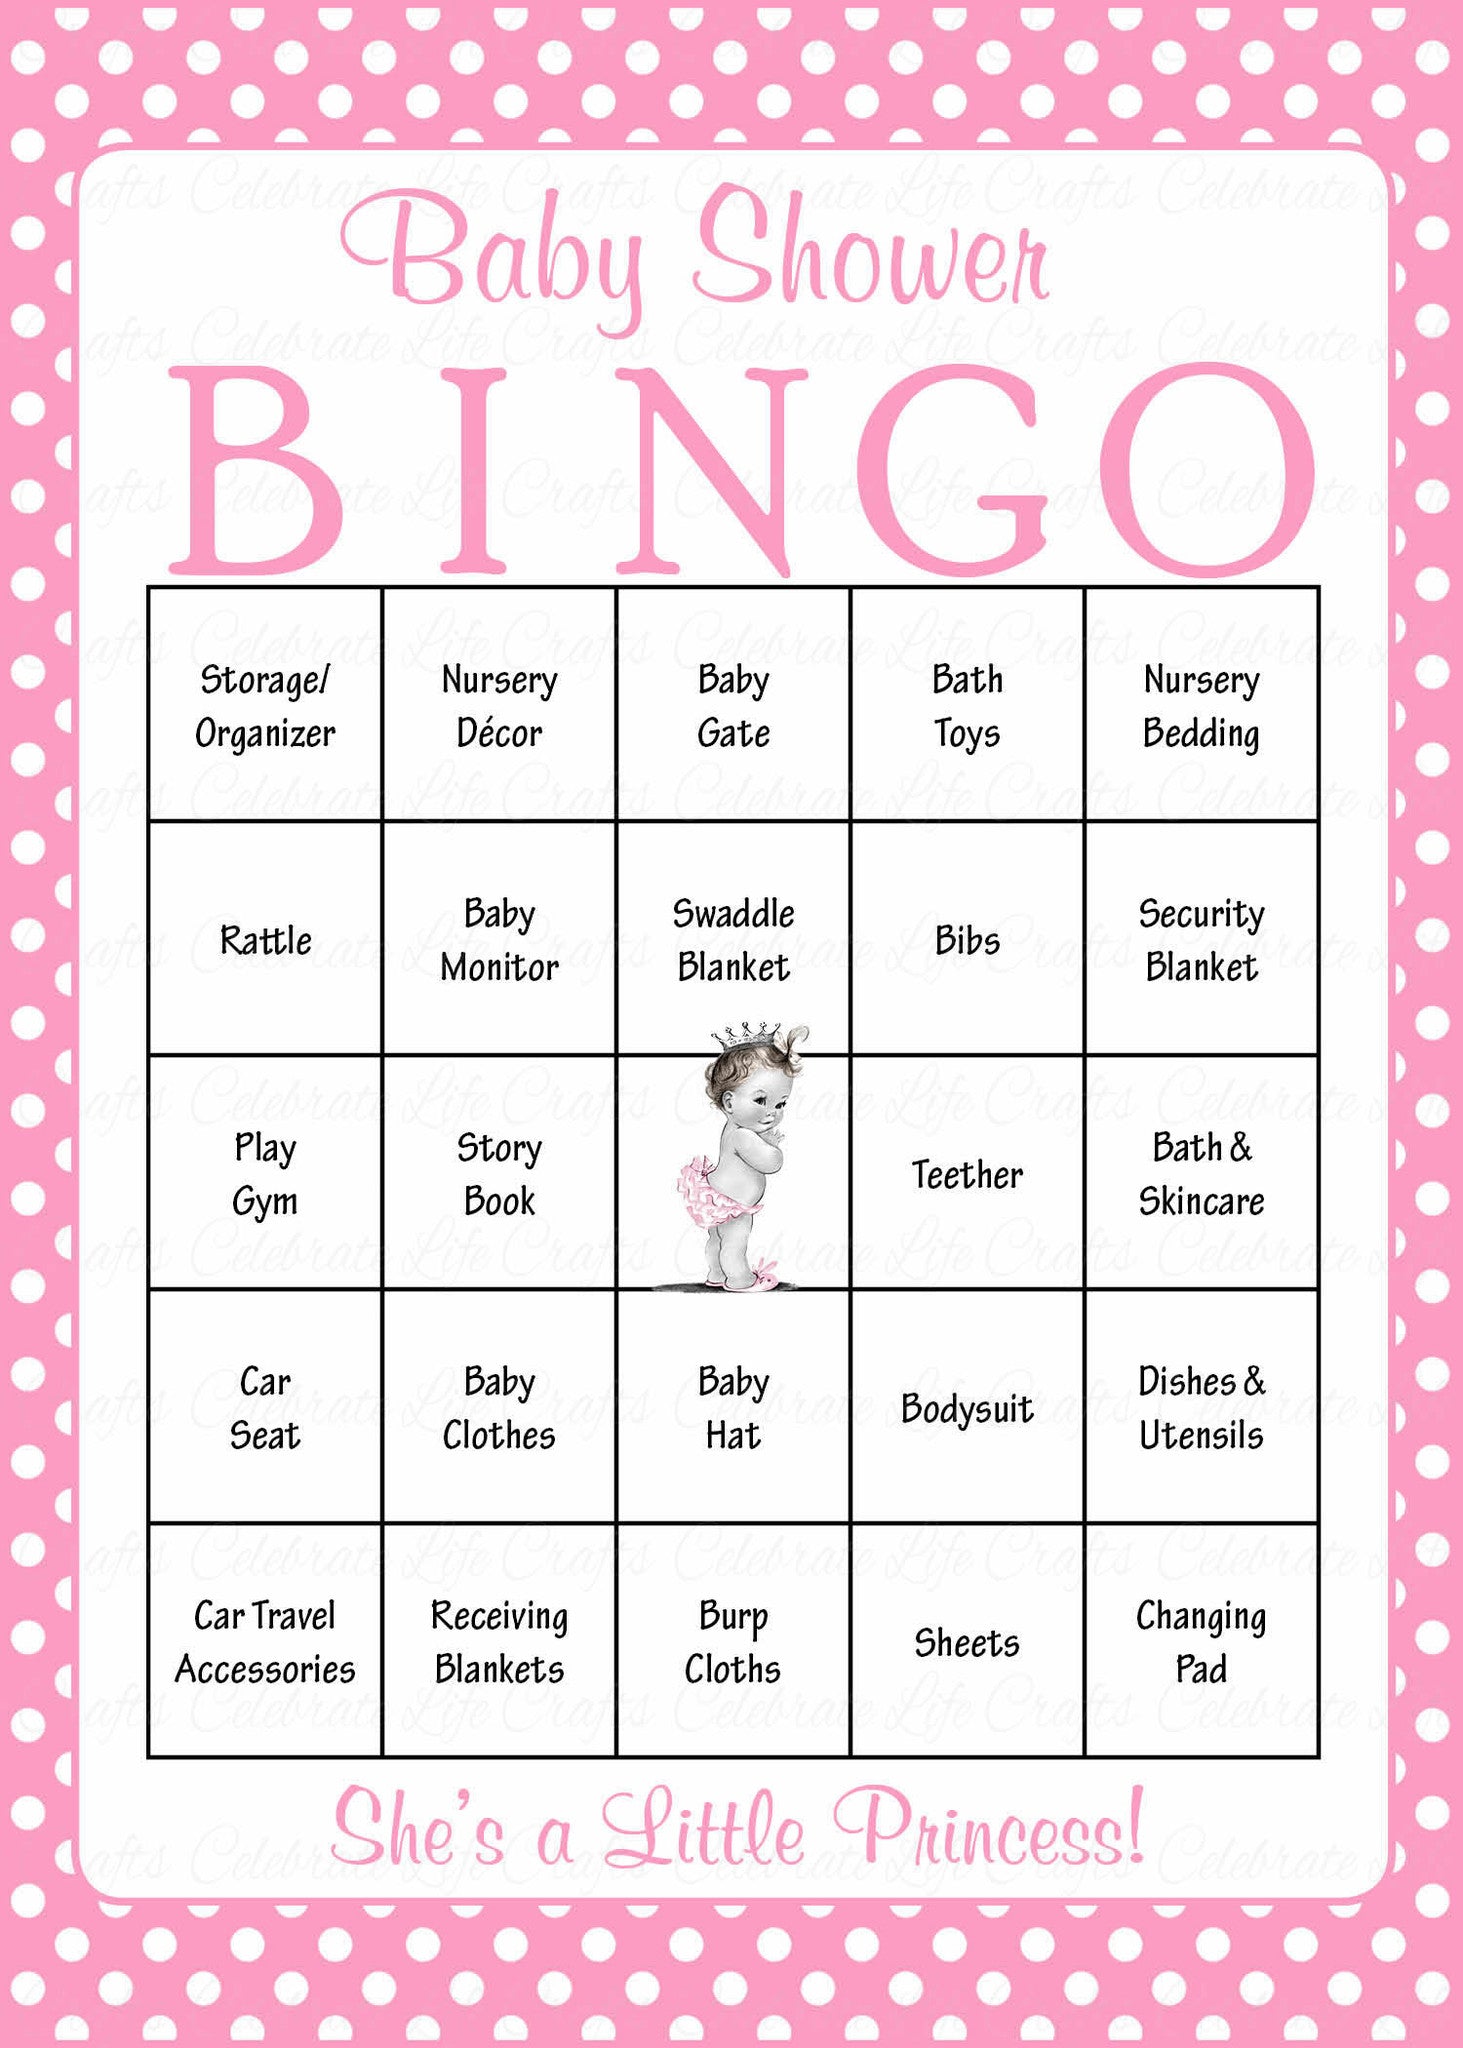 princess-baby-shower-game-download-for-girl-baby-bingo-celebrate